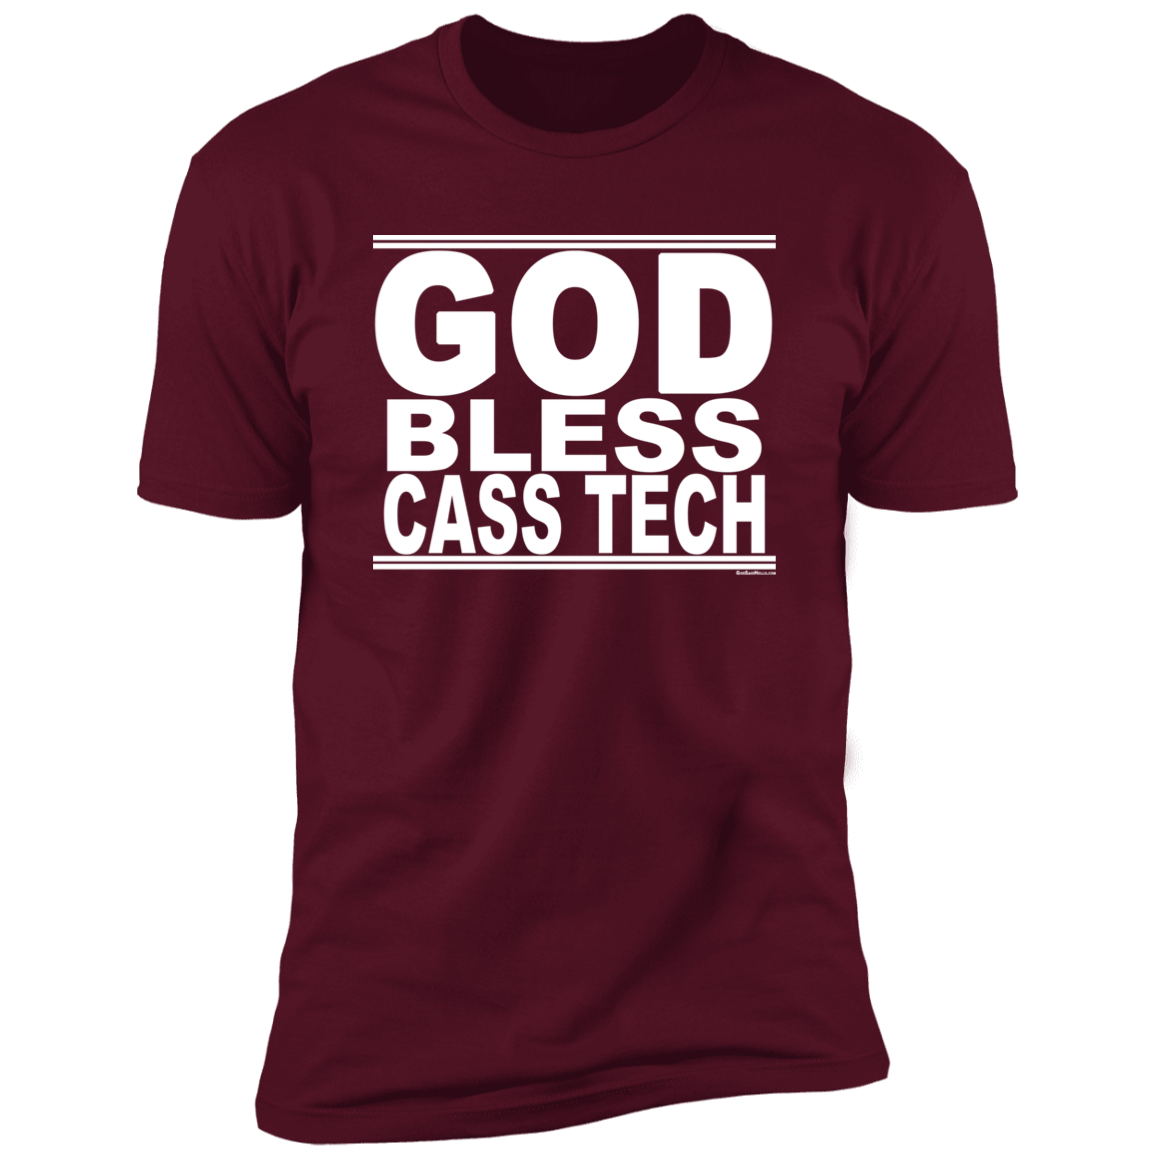 #GodBlessCassTech - Shortsleeve Tee (Special Edition)